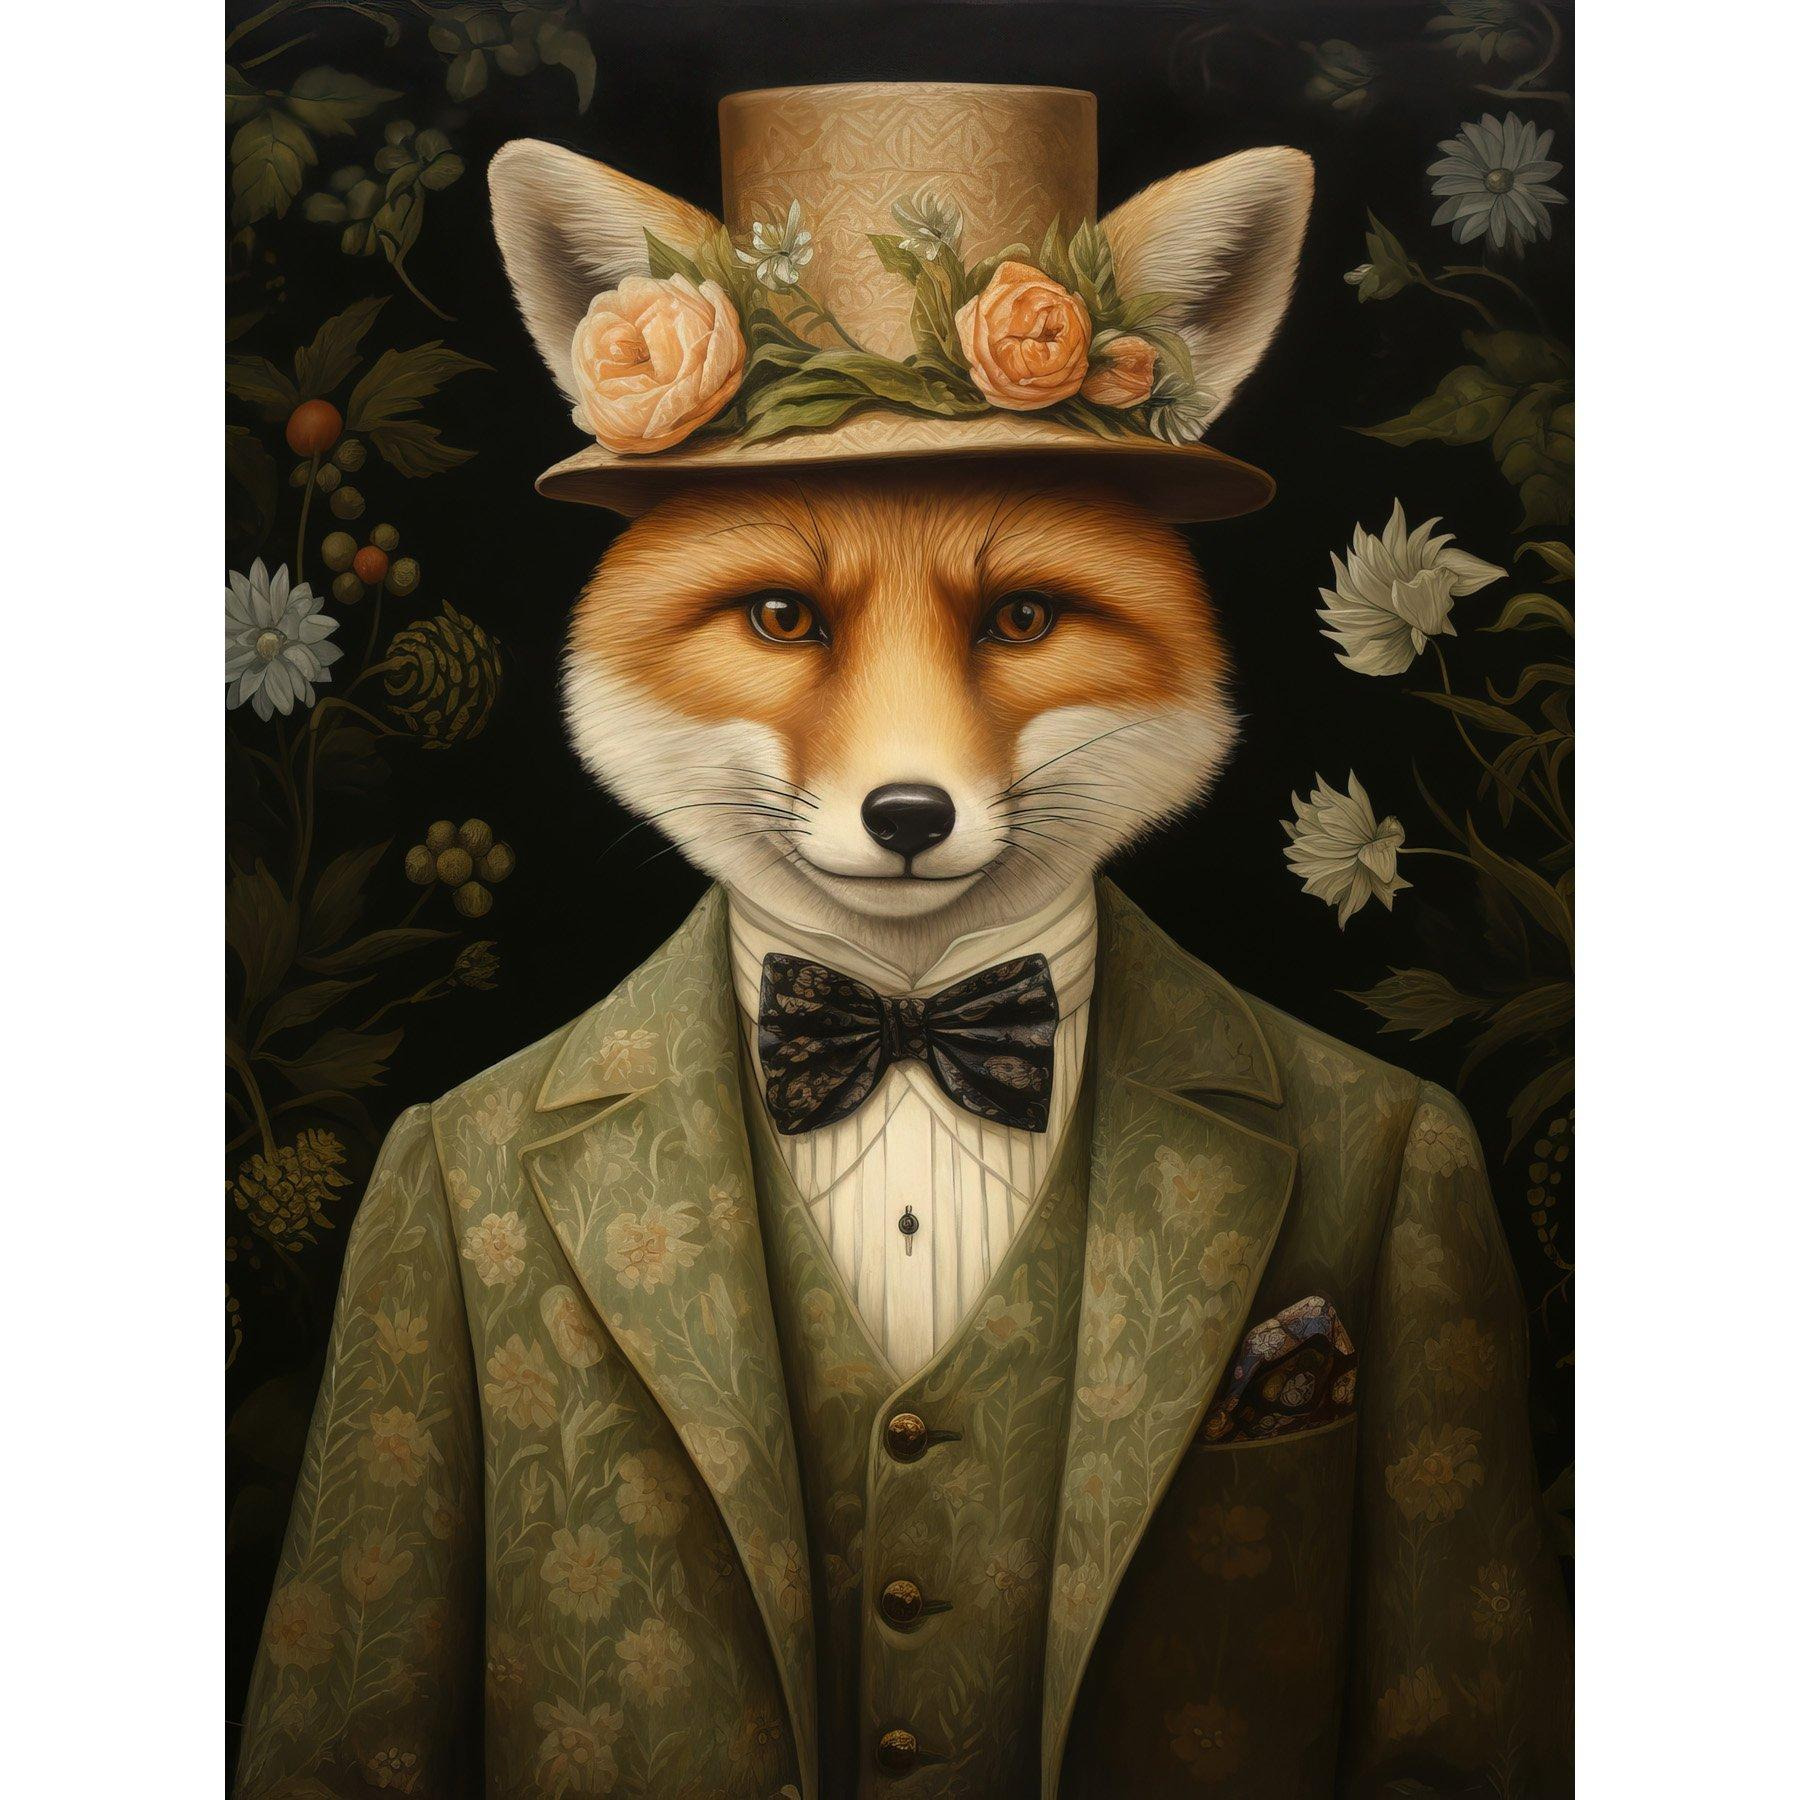 Fox in Floral Victorian Suit and Top Hat Surrealism Artwork Green Orange Woodland Gentleman Unframed Wall Art Print Poster Home Decor Premium - image 1